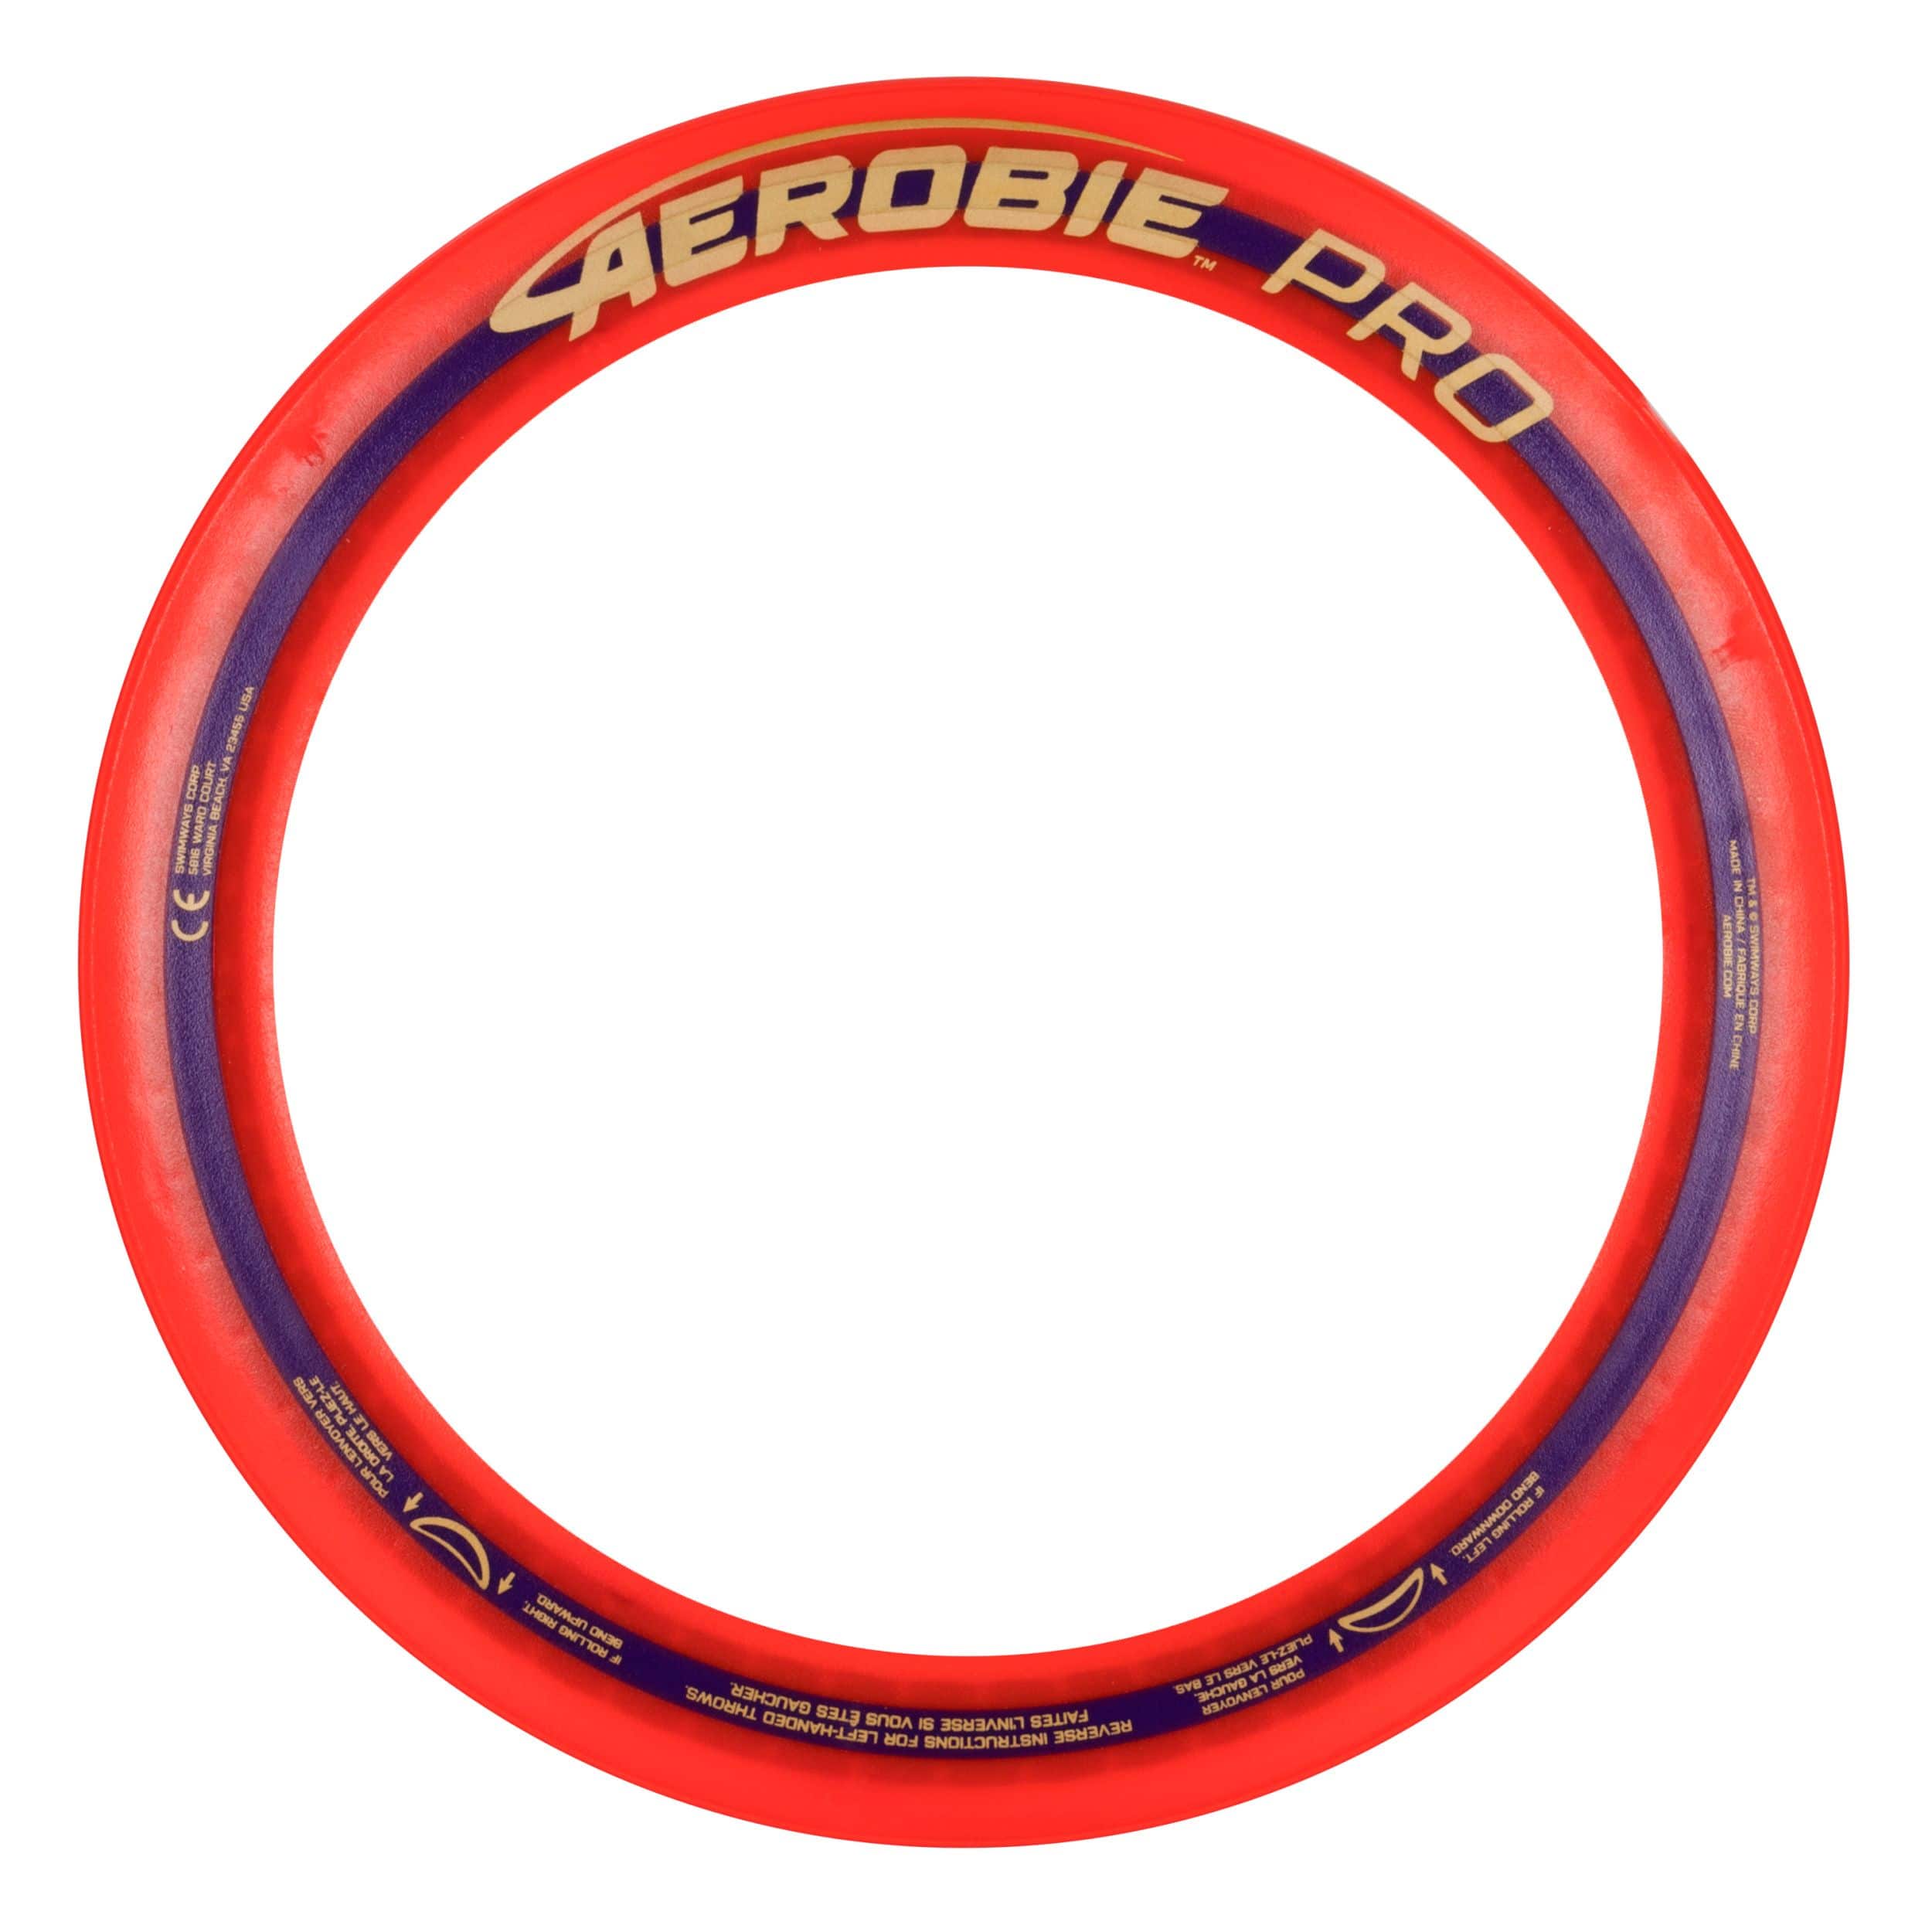 Swimways Aerobie Pro Ring Frisbee Flying Disc, Soft Rubber Edge